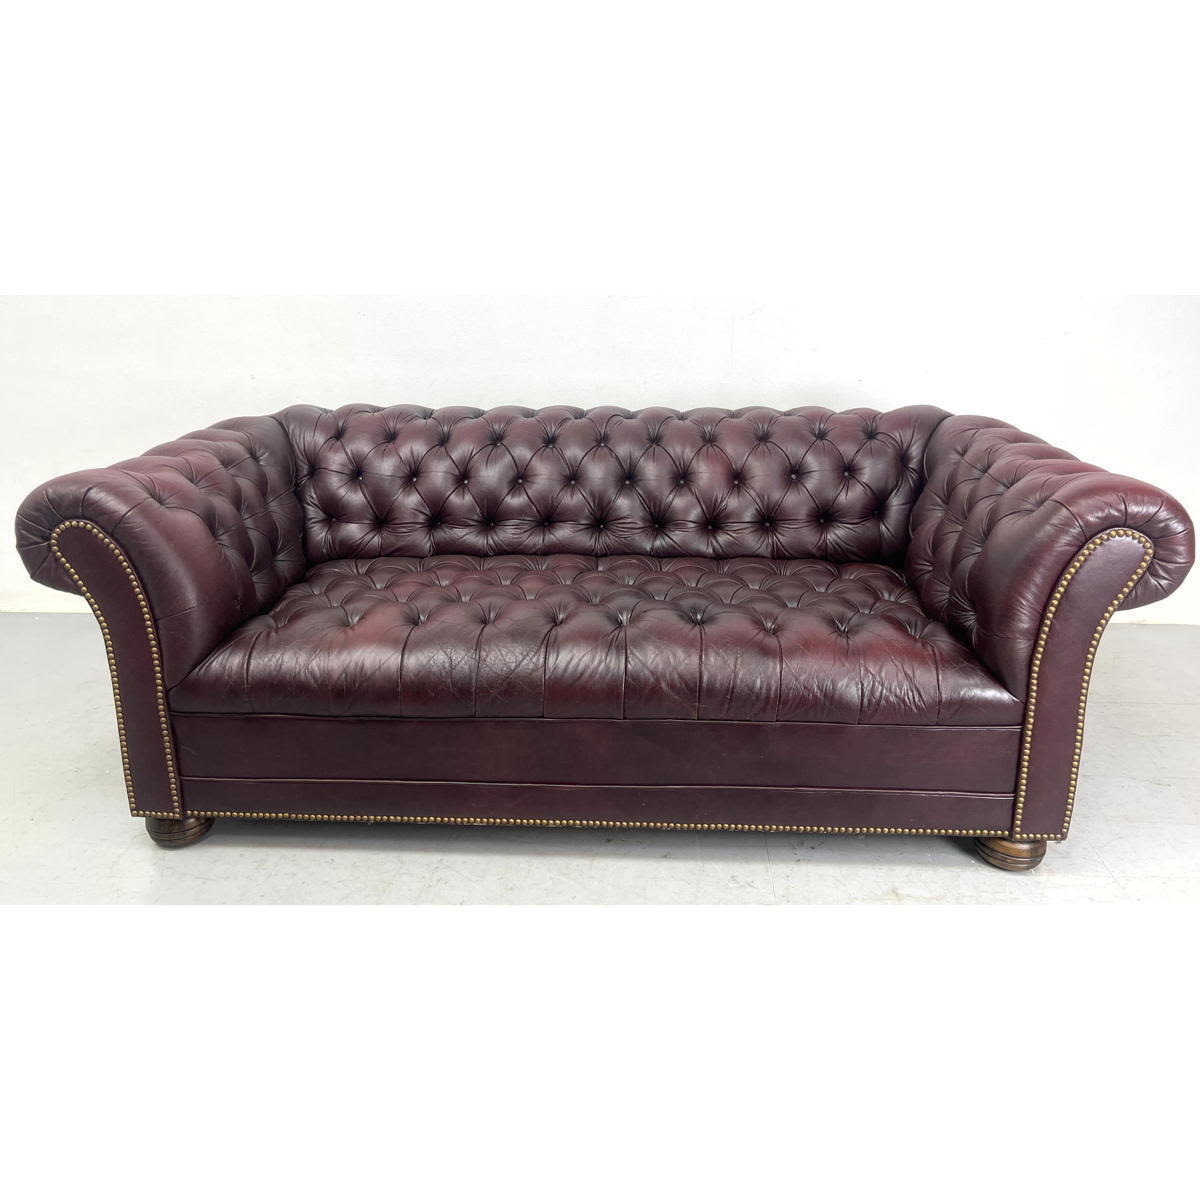 Burgundy leather Chesterfield Sofa 3003f4